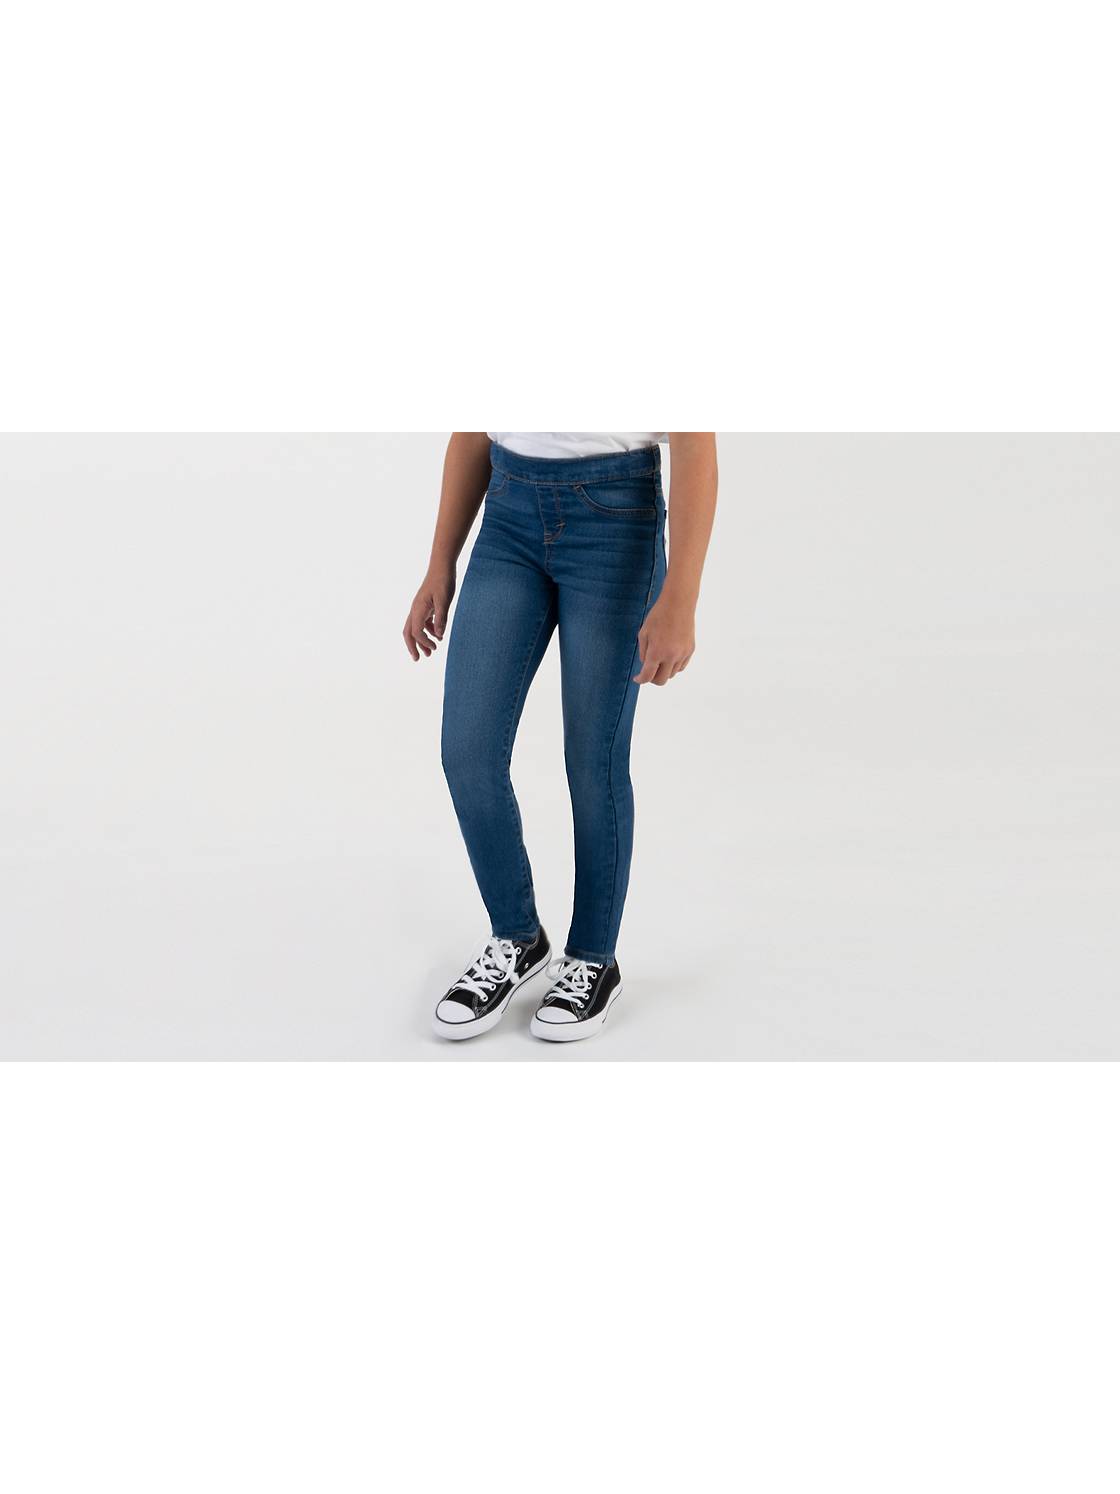 White House Black Market Women's Black Wash Skinny Stretch Jegging Jeans  Small